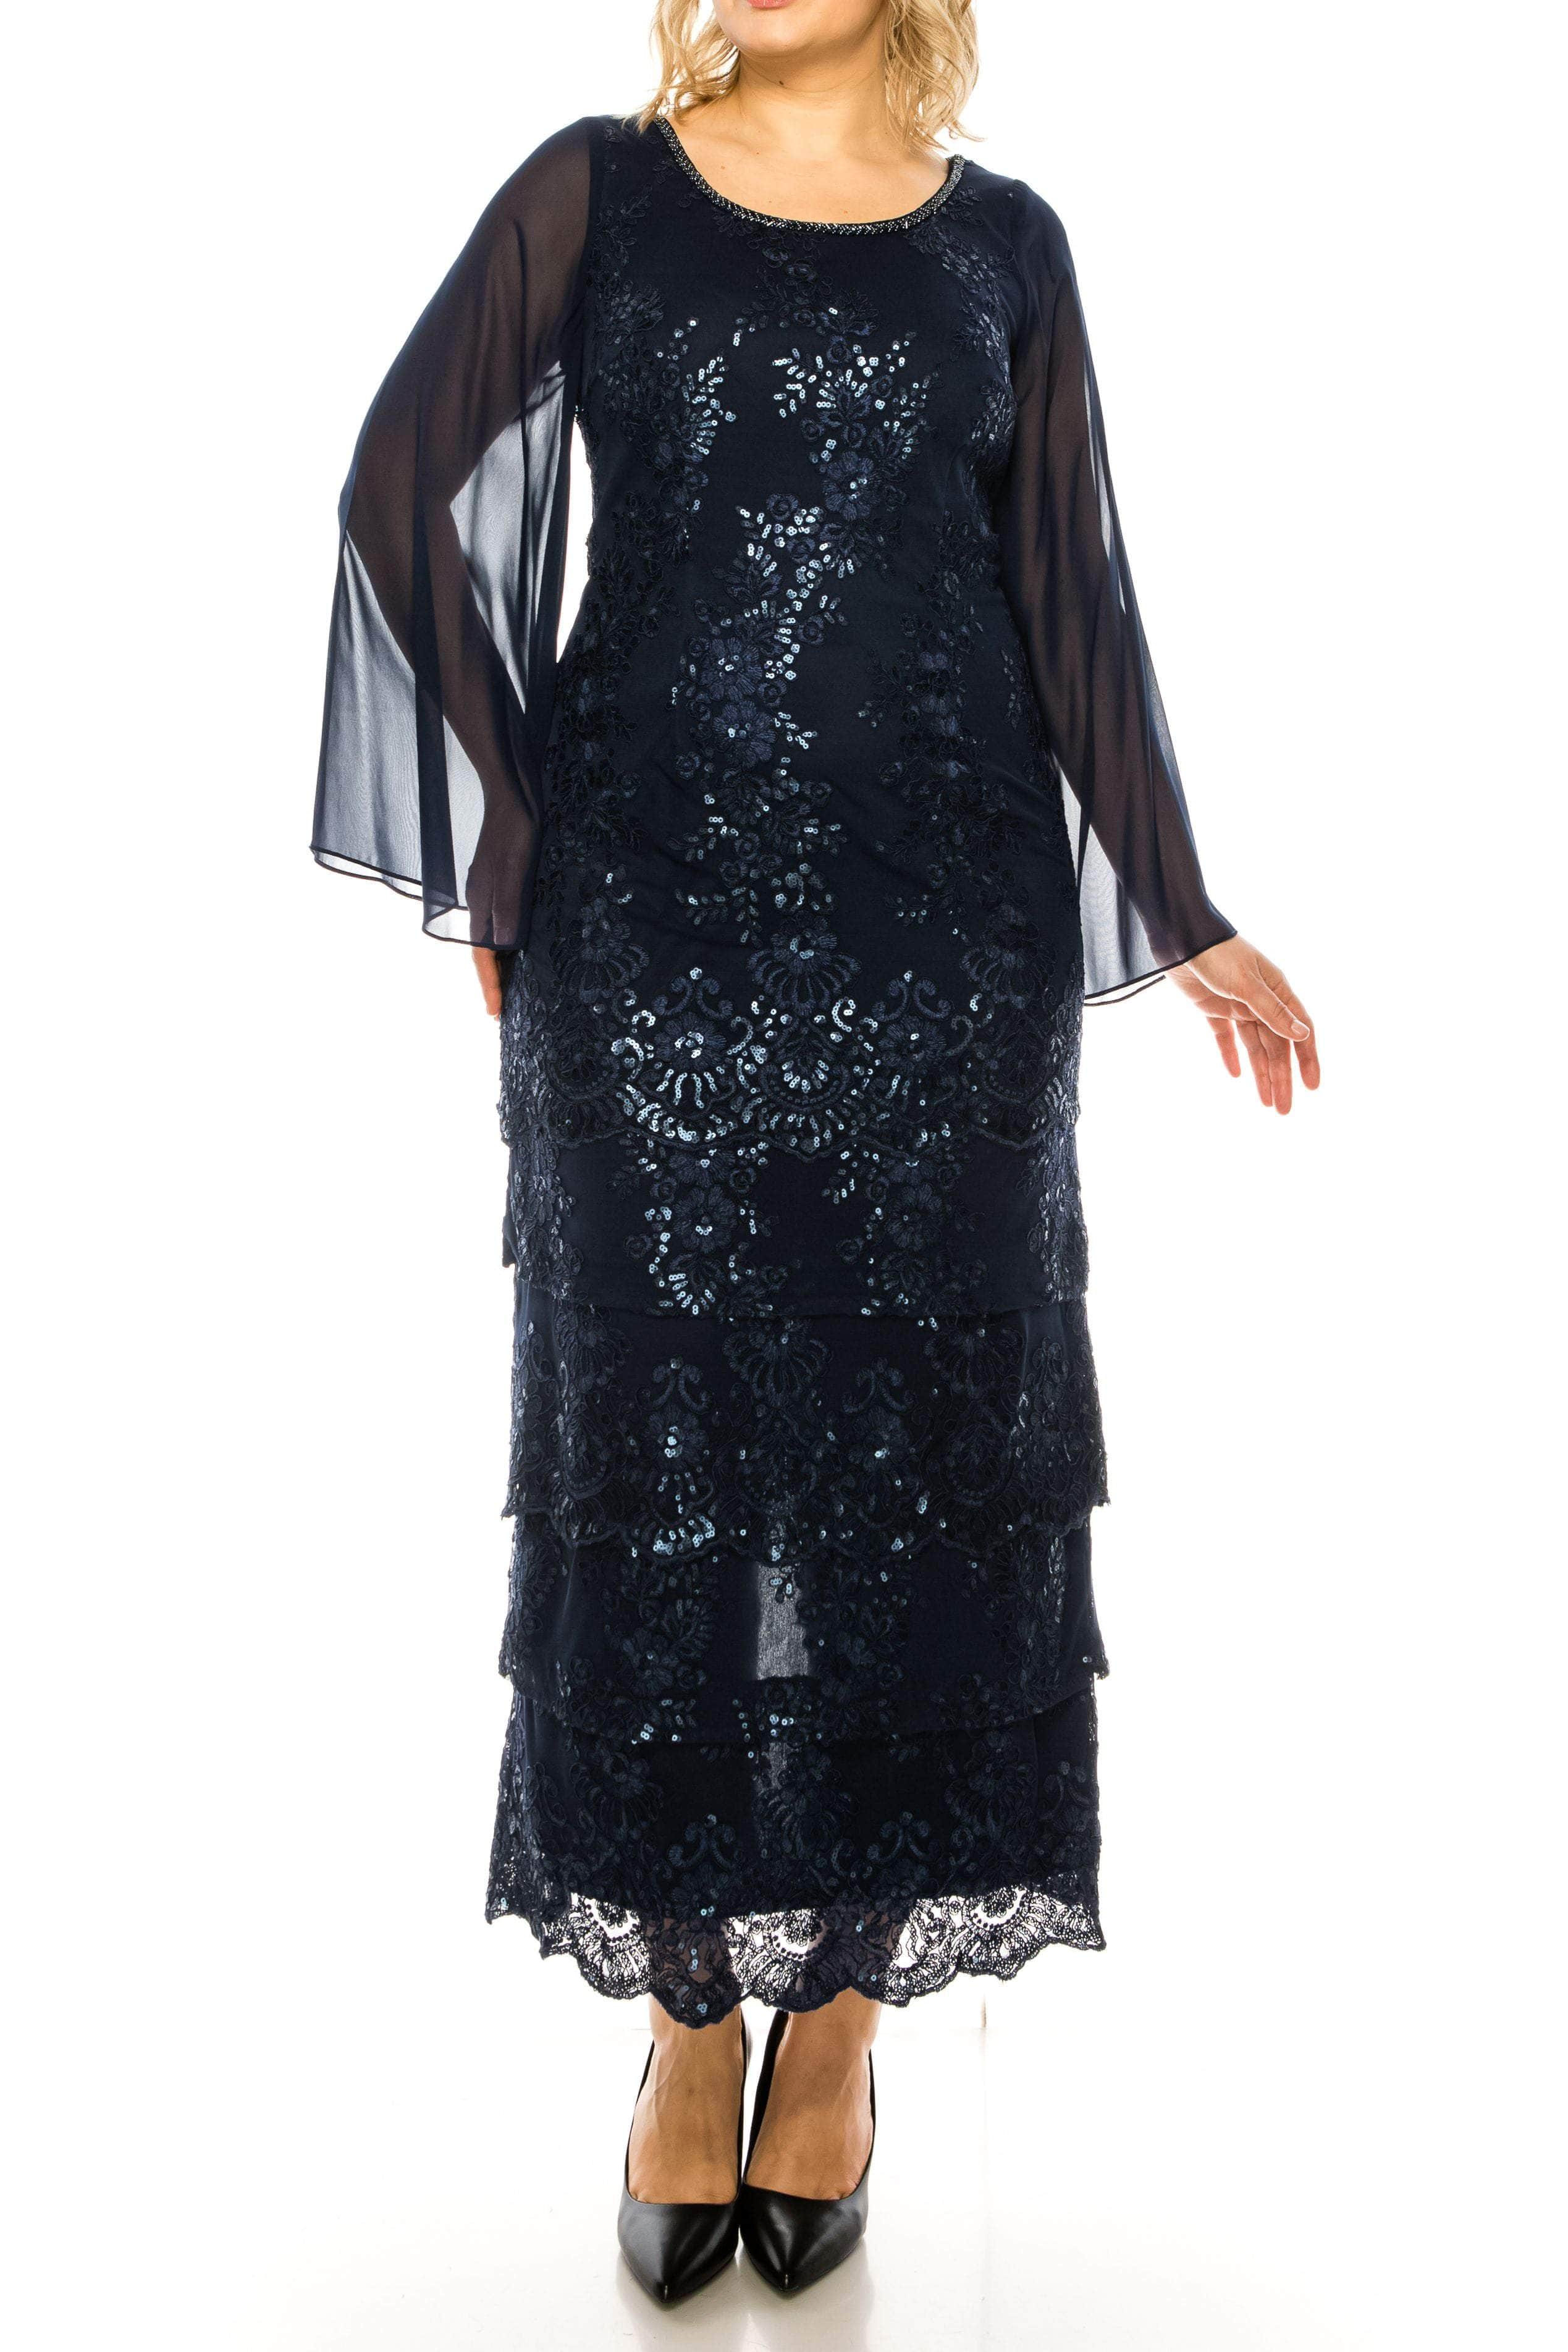 Image of Maya Brooke 28407MV - Floral Sequined Sheer Long Sleeved Tiered Dress